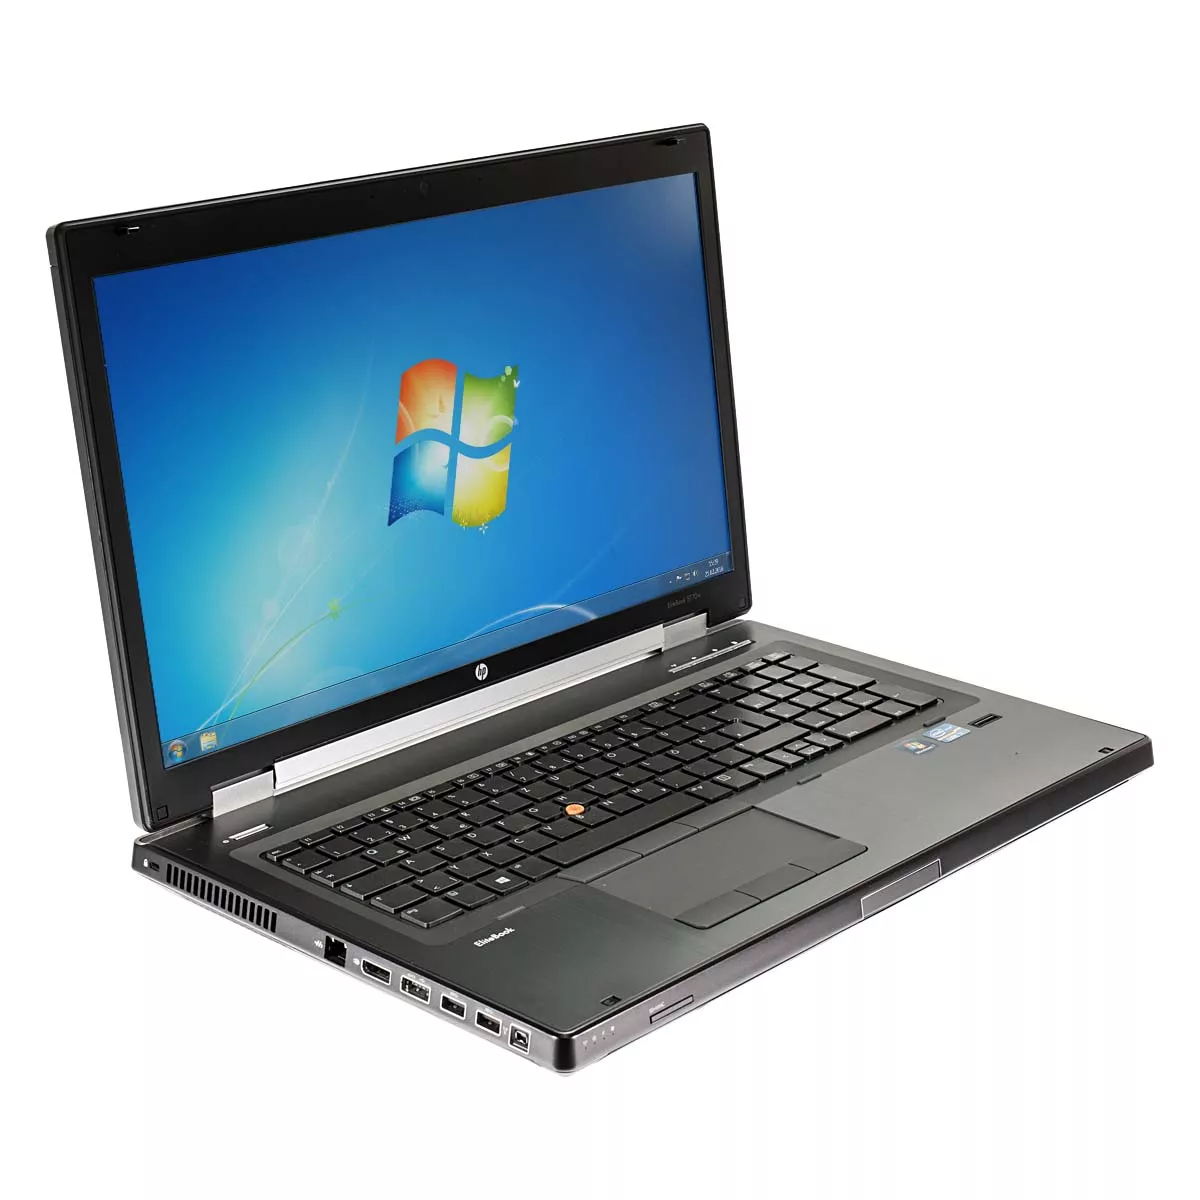 HP Elitebook 8760w Core i5 2540M 2,6 GHz Webcam